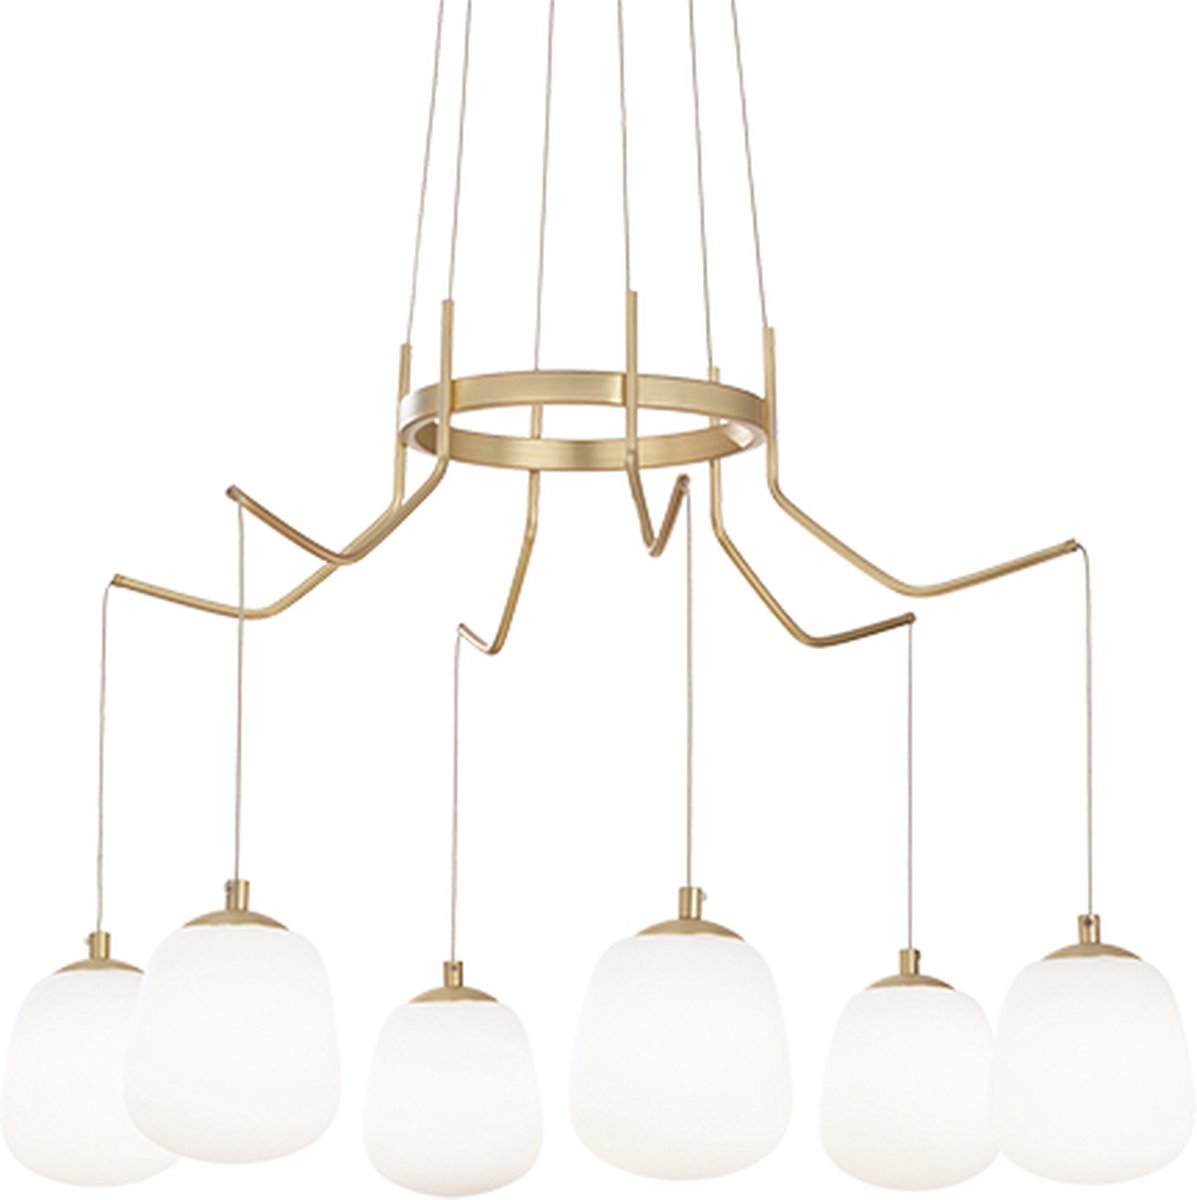 Ideal Lux - Karousel - Hanglamp - Metaal - G9 - Messing - Voor binnen - Lampen - Woonkamer - Eetkamer - Keuken